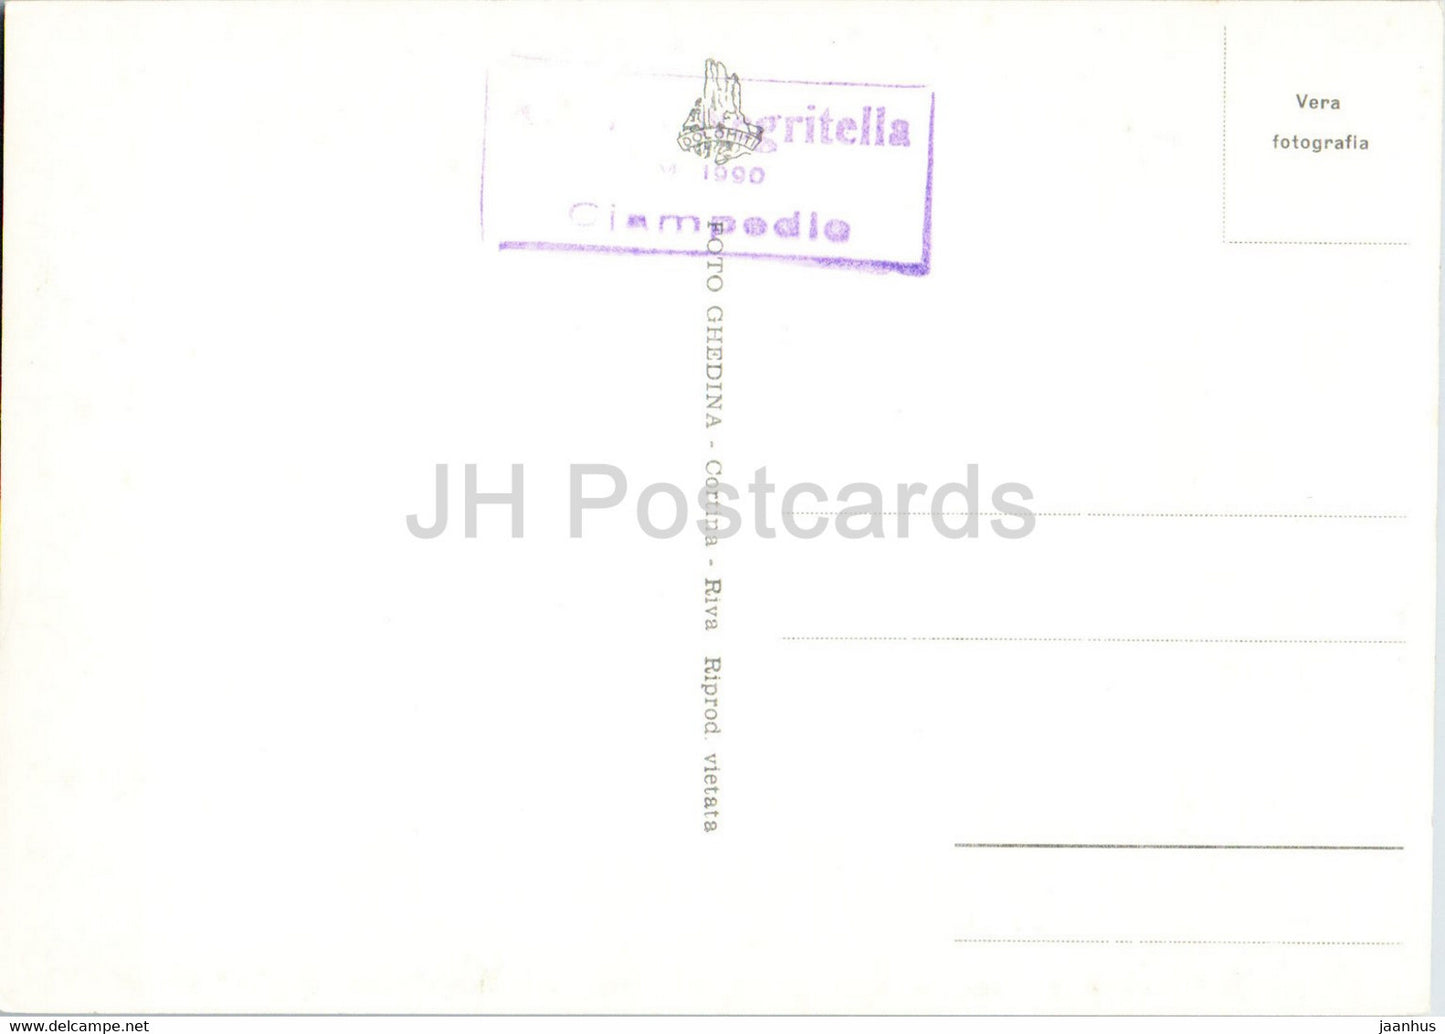 Rif Negritella - Ciampedie - Dirupi di Larsec 2889 - old postcard - Italy - unused